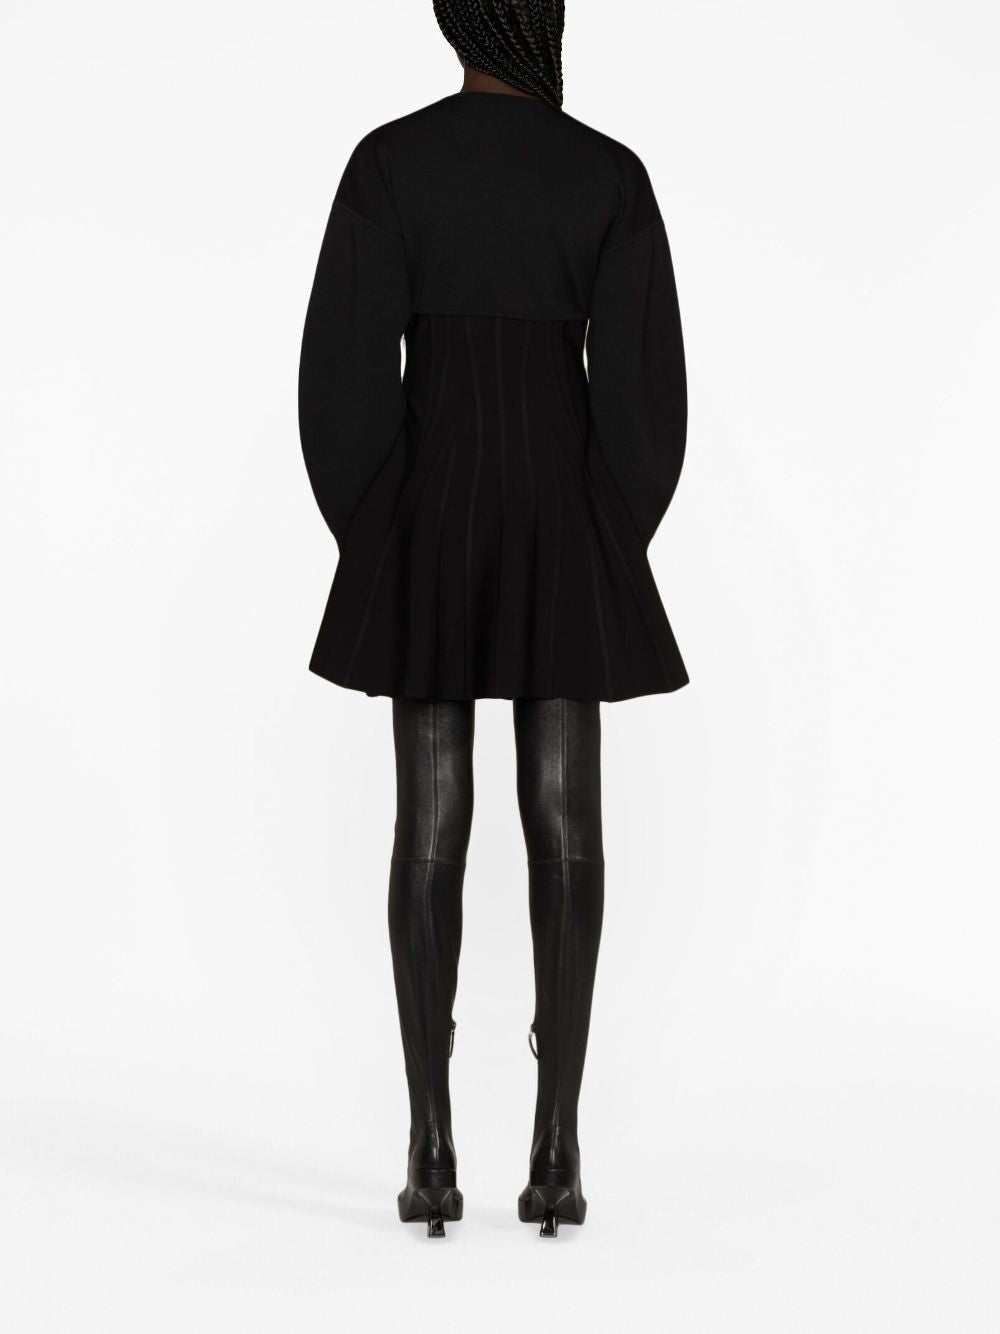 ALEXANDER MCQUEEN Black Wool Dress for Women - FW23 Collection